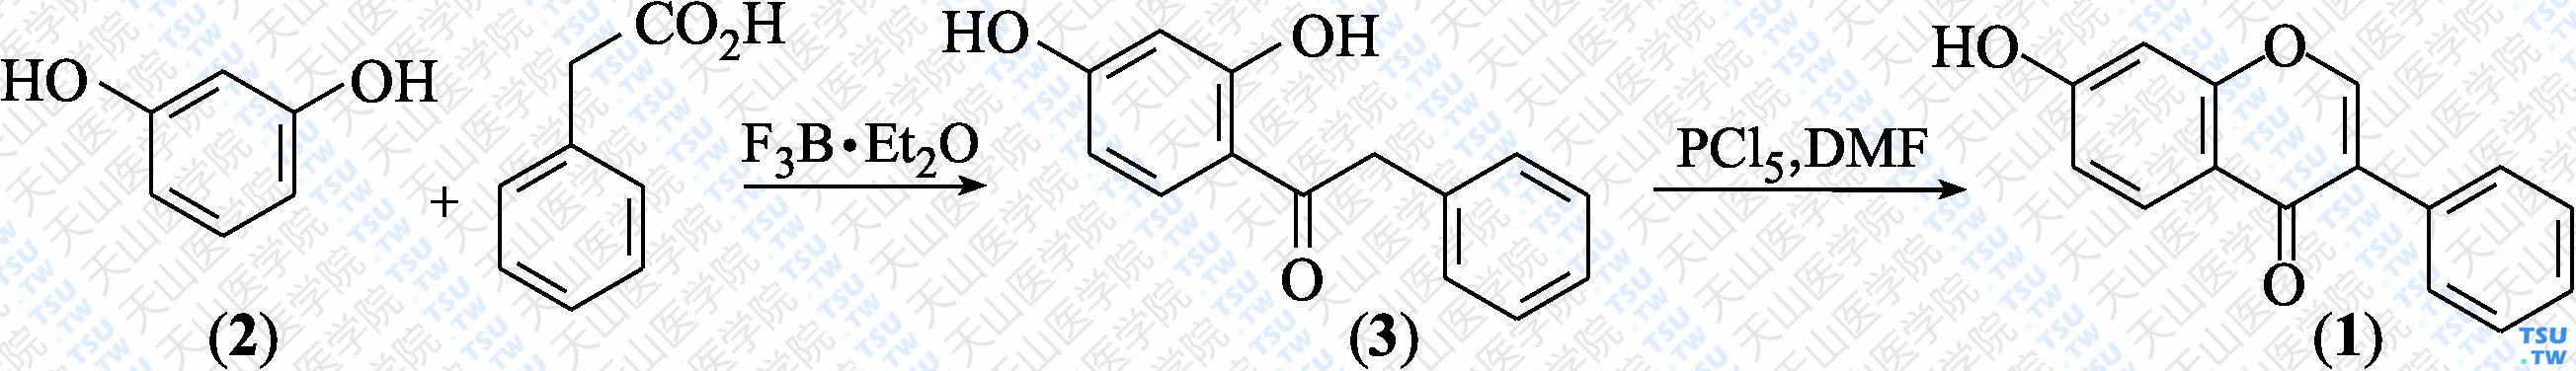 7-羟基异黄酮（分子式：C<sub>15</sub>H<sub>10</sub>O<sub>3</sub>）的合成方法路线及其结构式